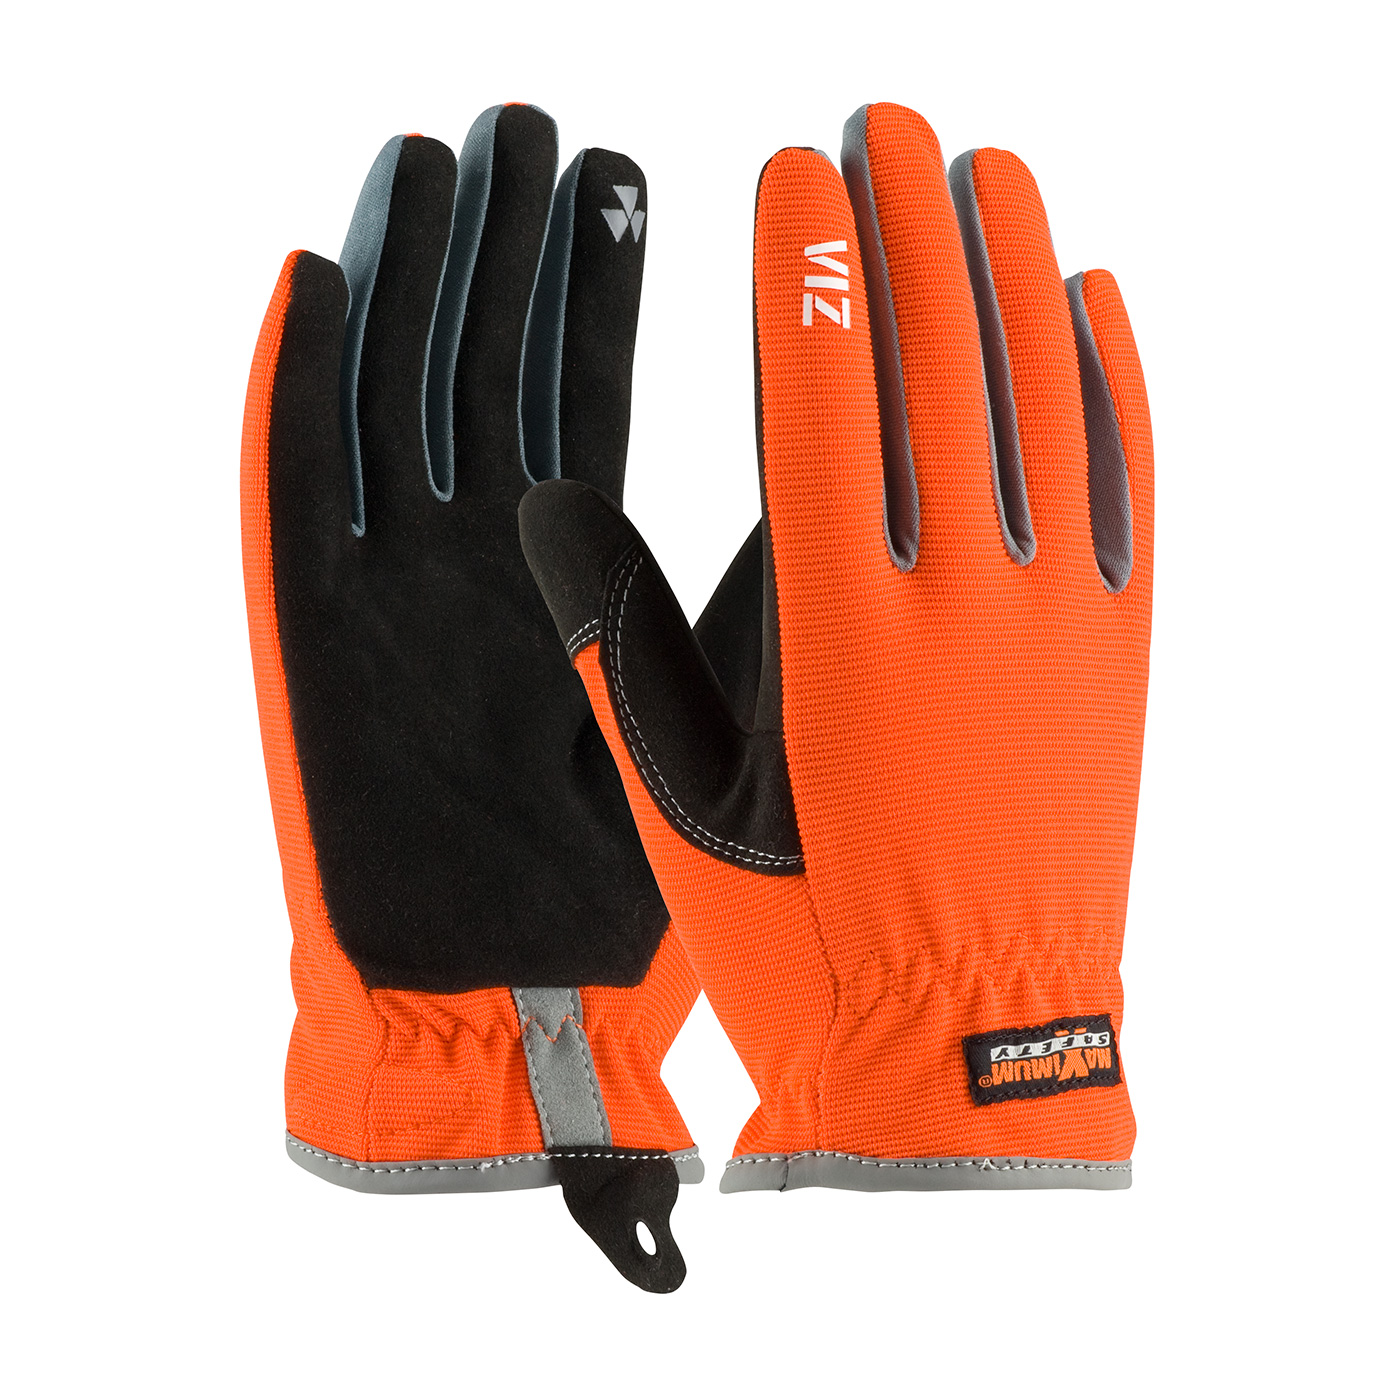 PIP 120-4600/S Mechcanic Hi-Viz Maximum Safety Glove - Small PID-120 4600 S